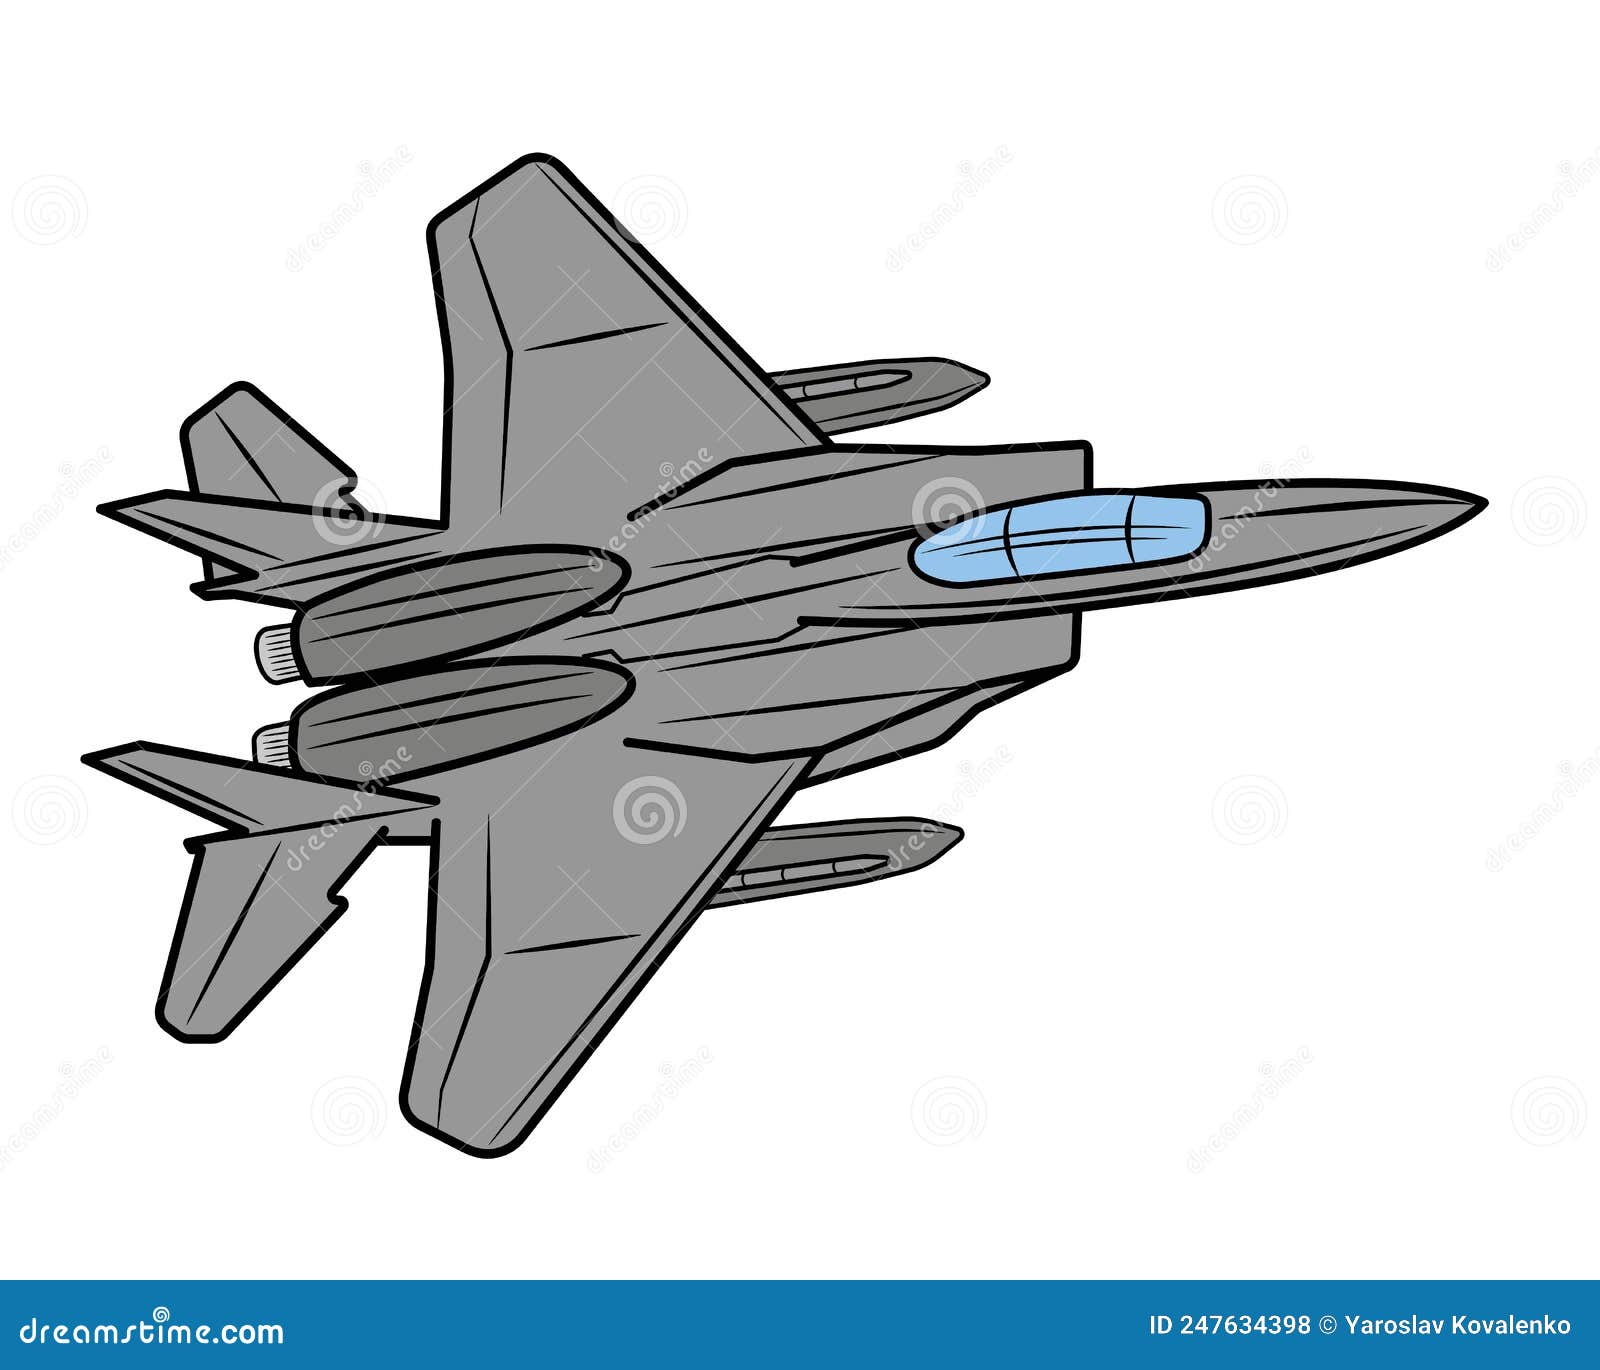 1,518 Fighter Plane Sketch Images, Stock Photos & Vectors | Shutterstock